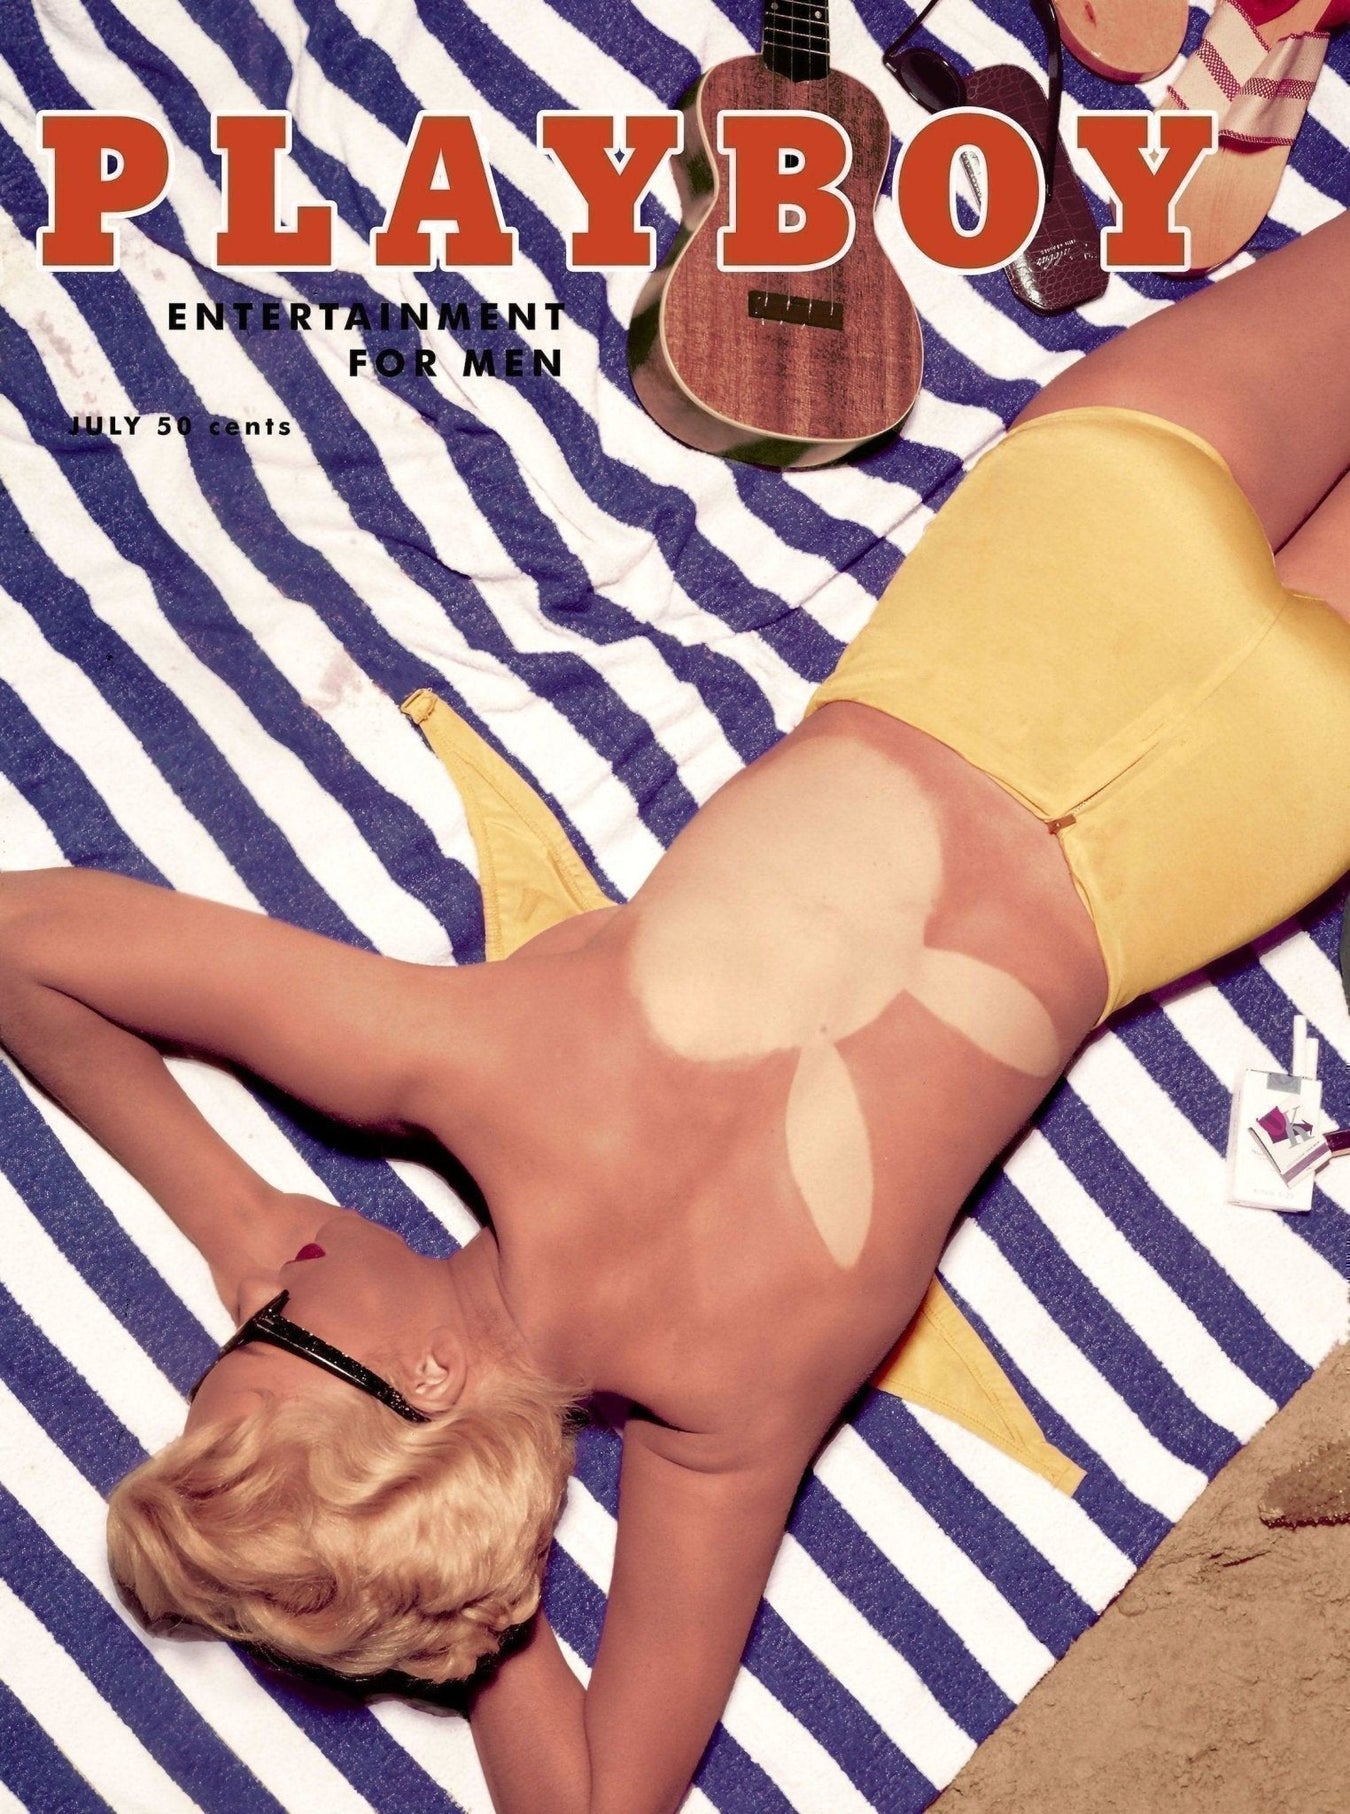 Playboy Vintage Covers-International Images